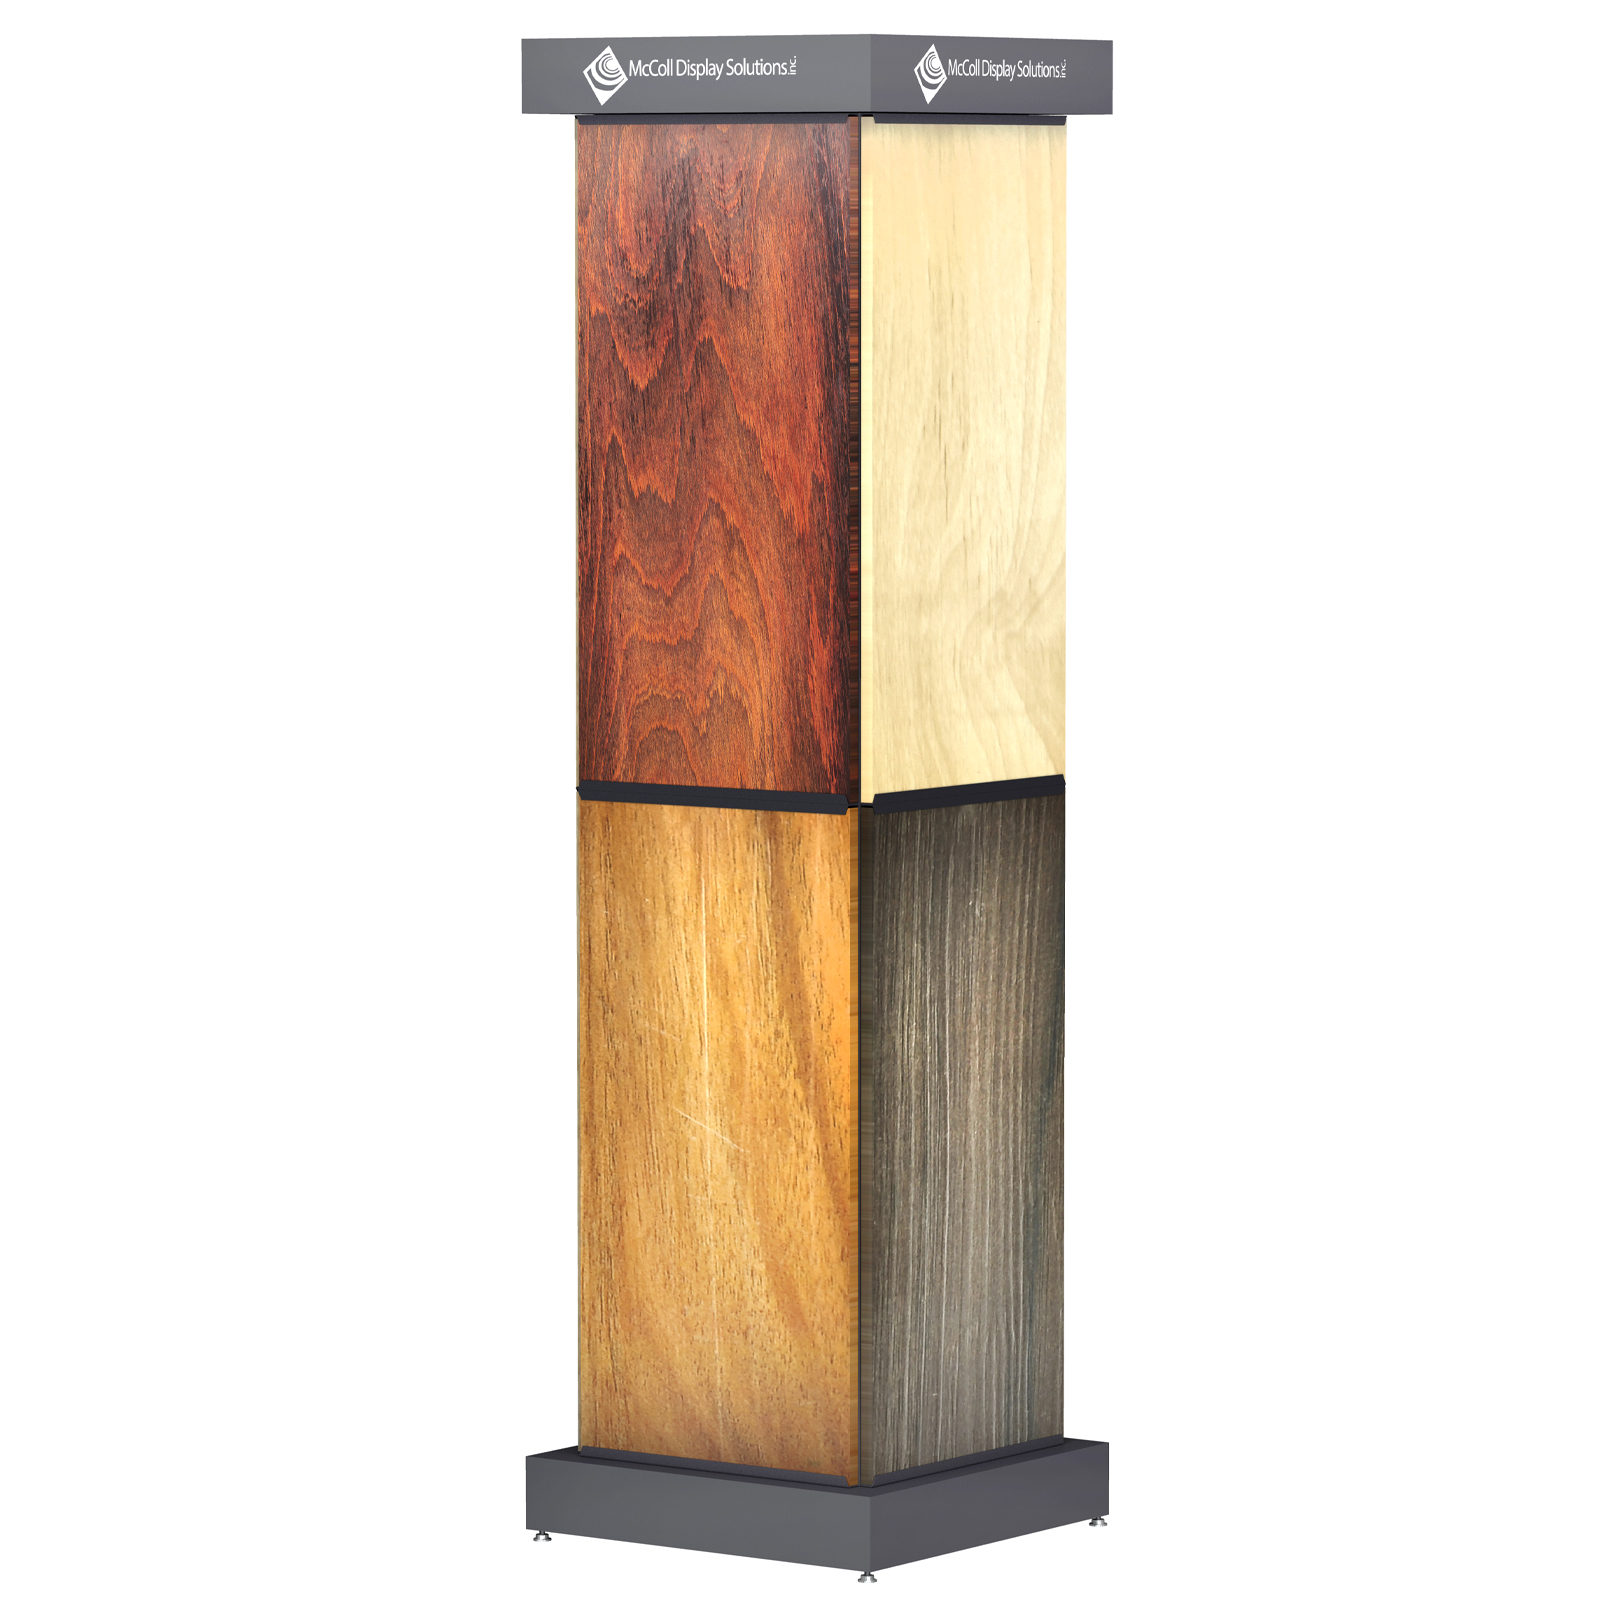 CD66 Tower Sample Tile Hardwood Laminate Wood Plank Flooring System Showroom Displays McColl Display